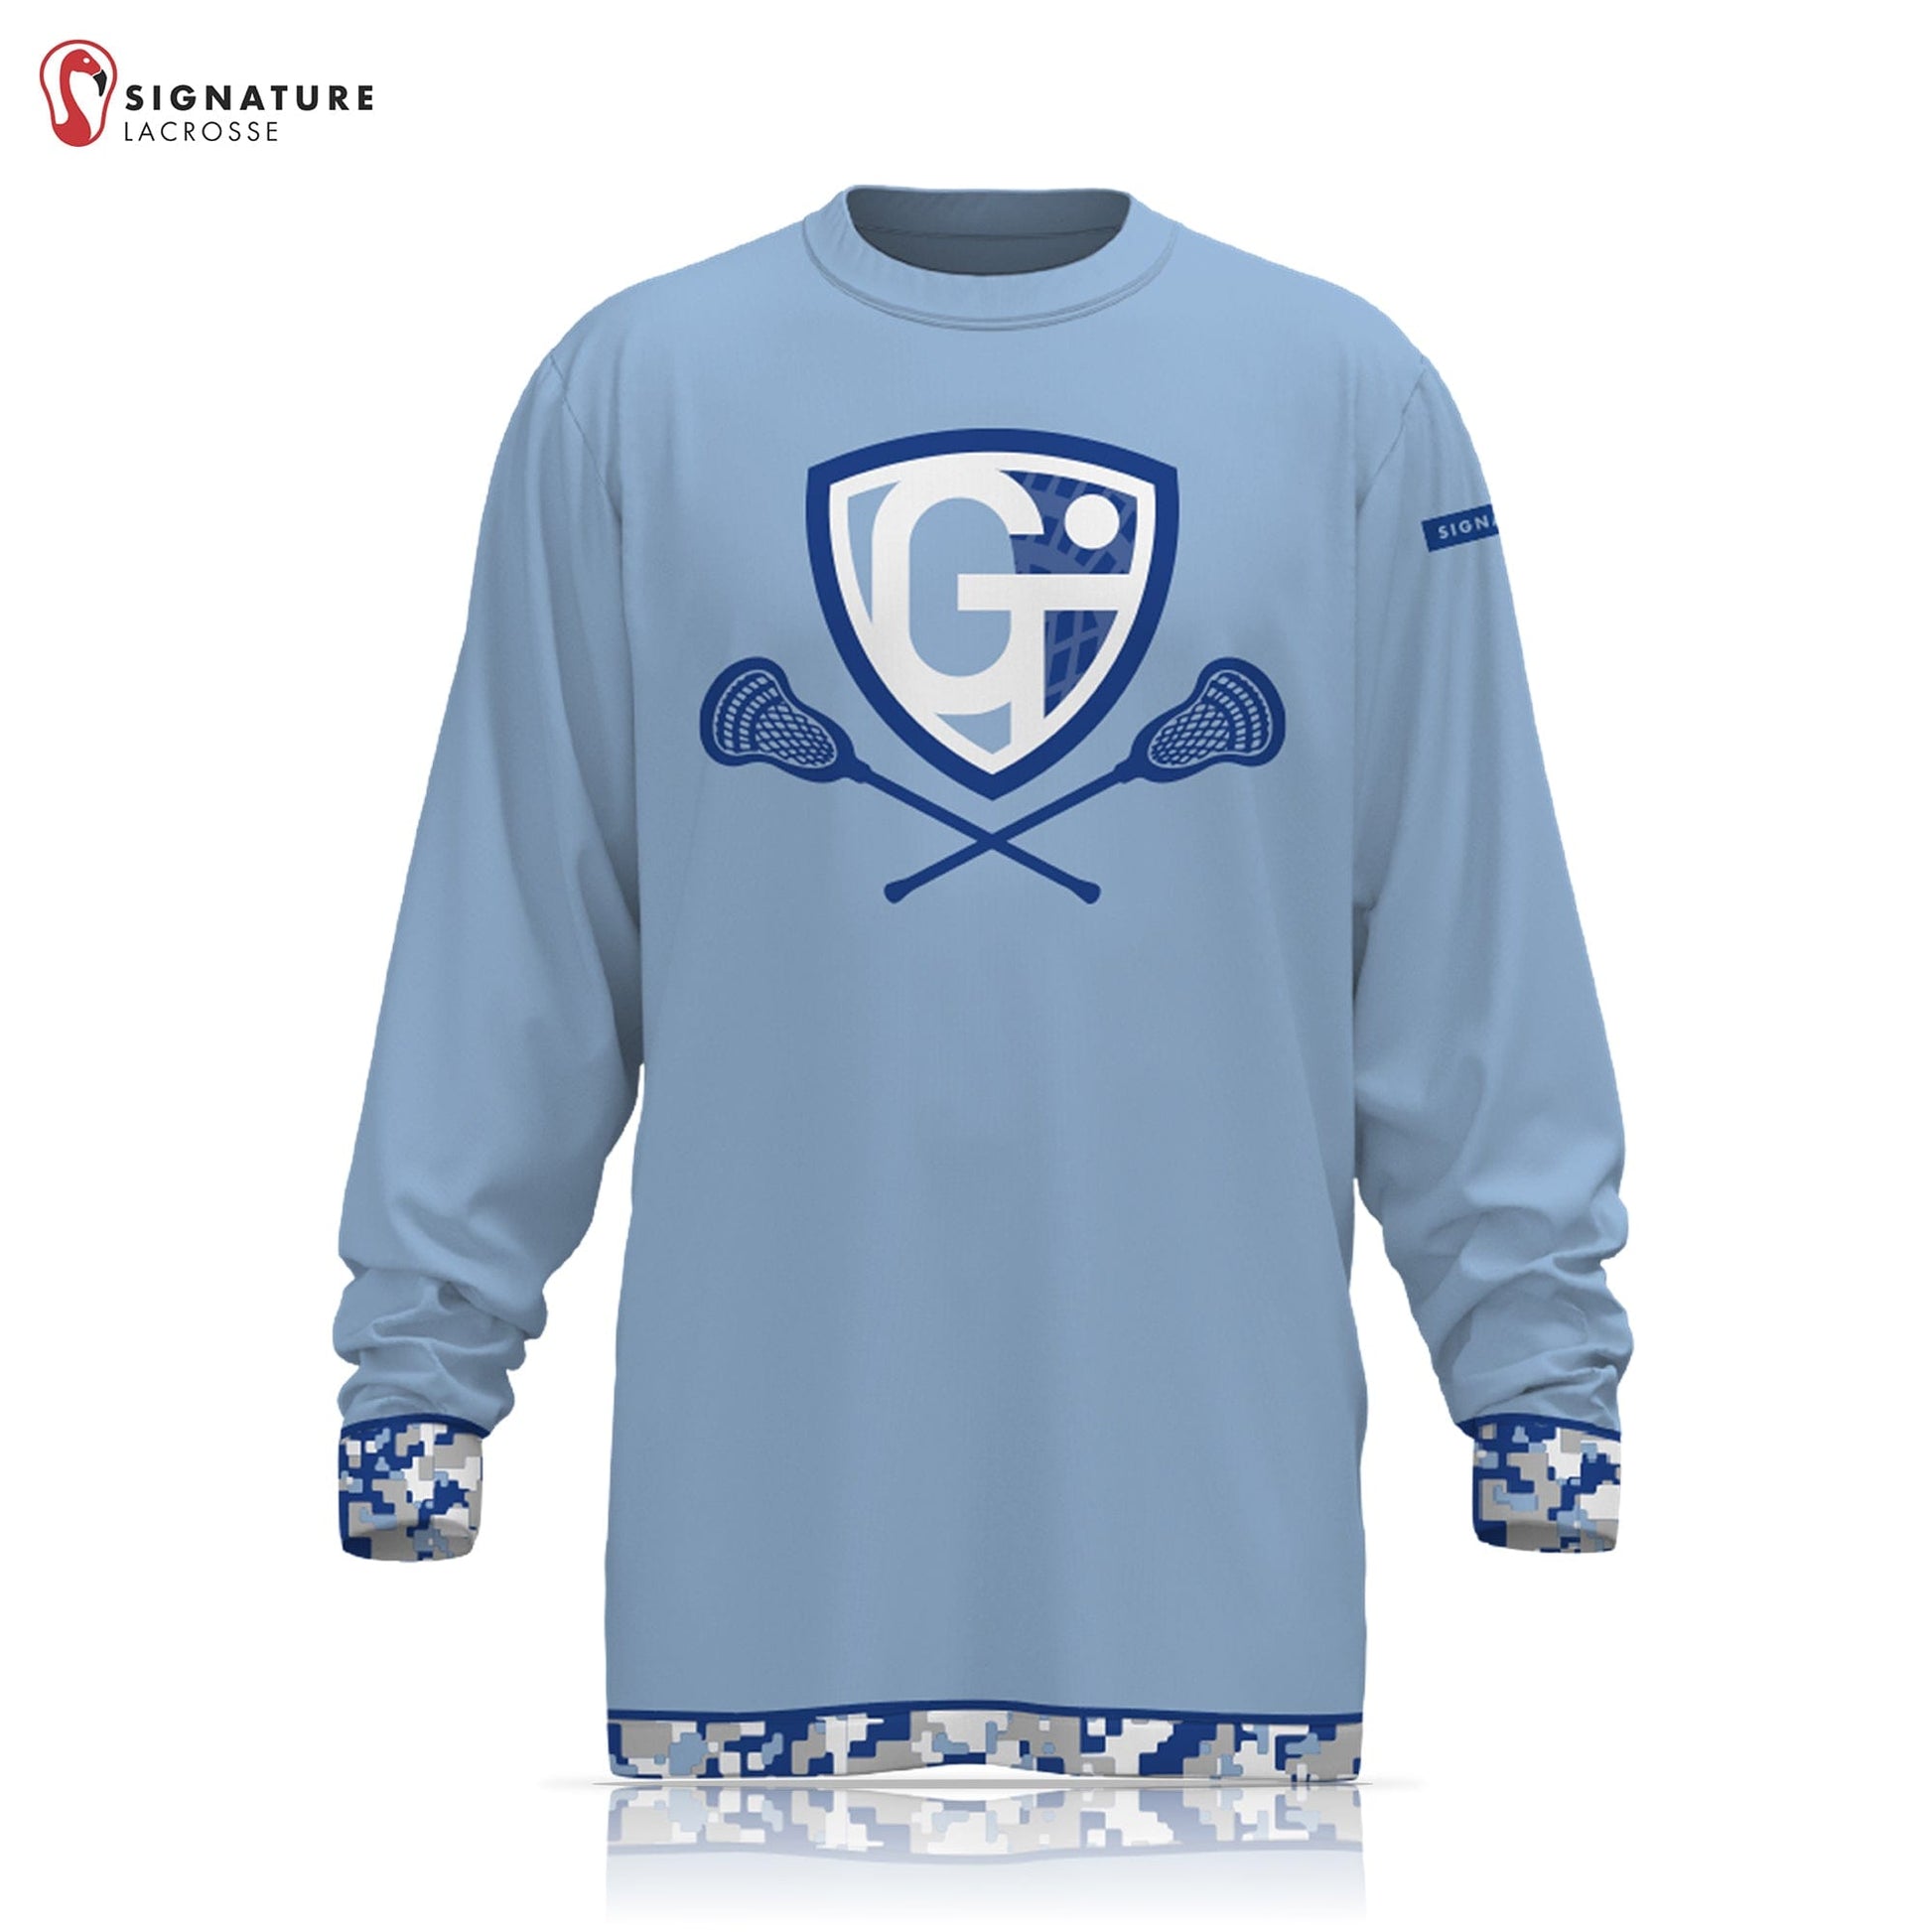 Georgetown Triton Lacrosse Player Long Sleeve Shooting Shirt: 3-4 Signature Lacrosse